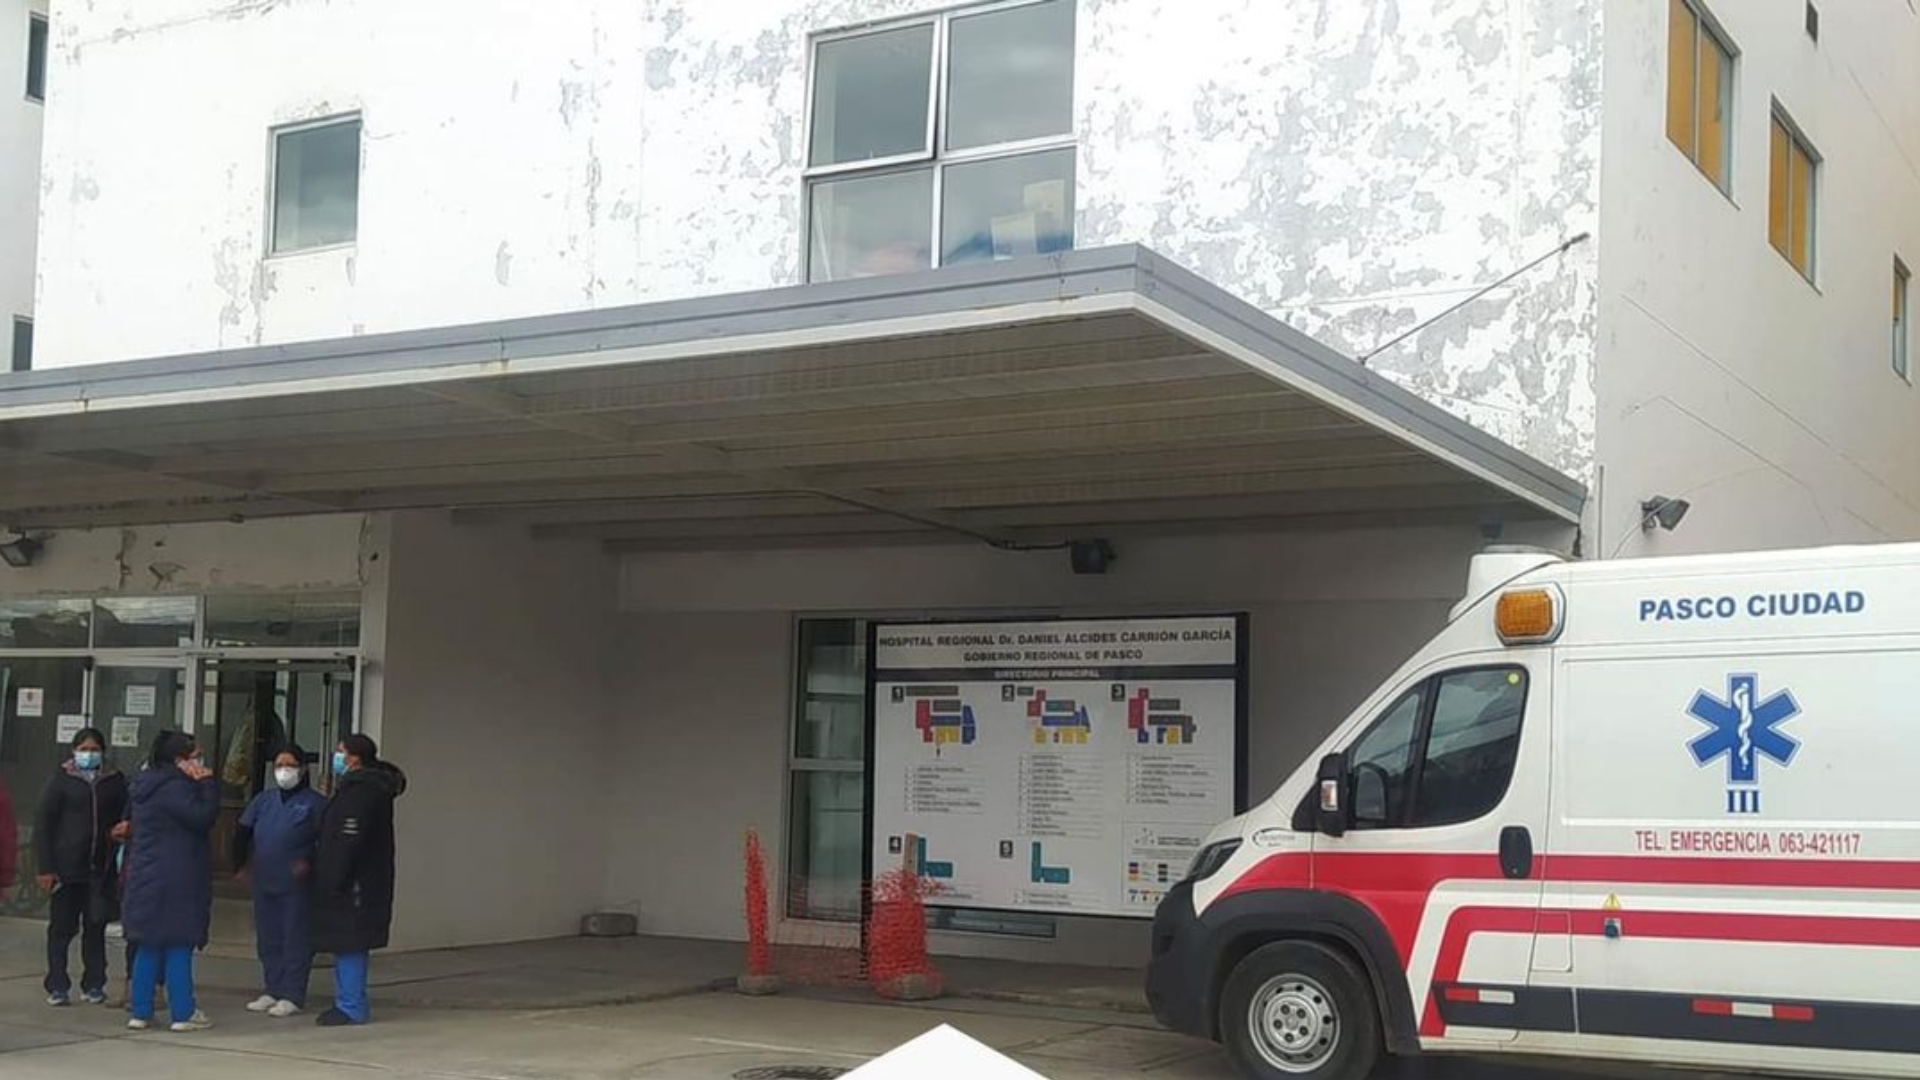 Pasco: Fuga de gas cloro alertó a pacientes y personal del Hospital Daniel Alcides Carrión.
Foto: Observatorio Comunicaciones